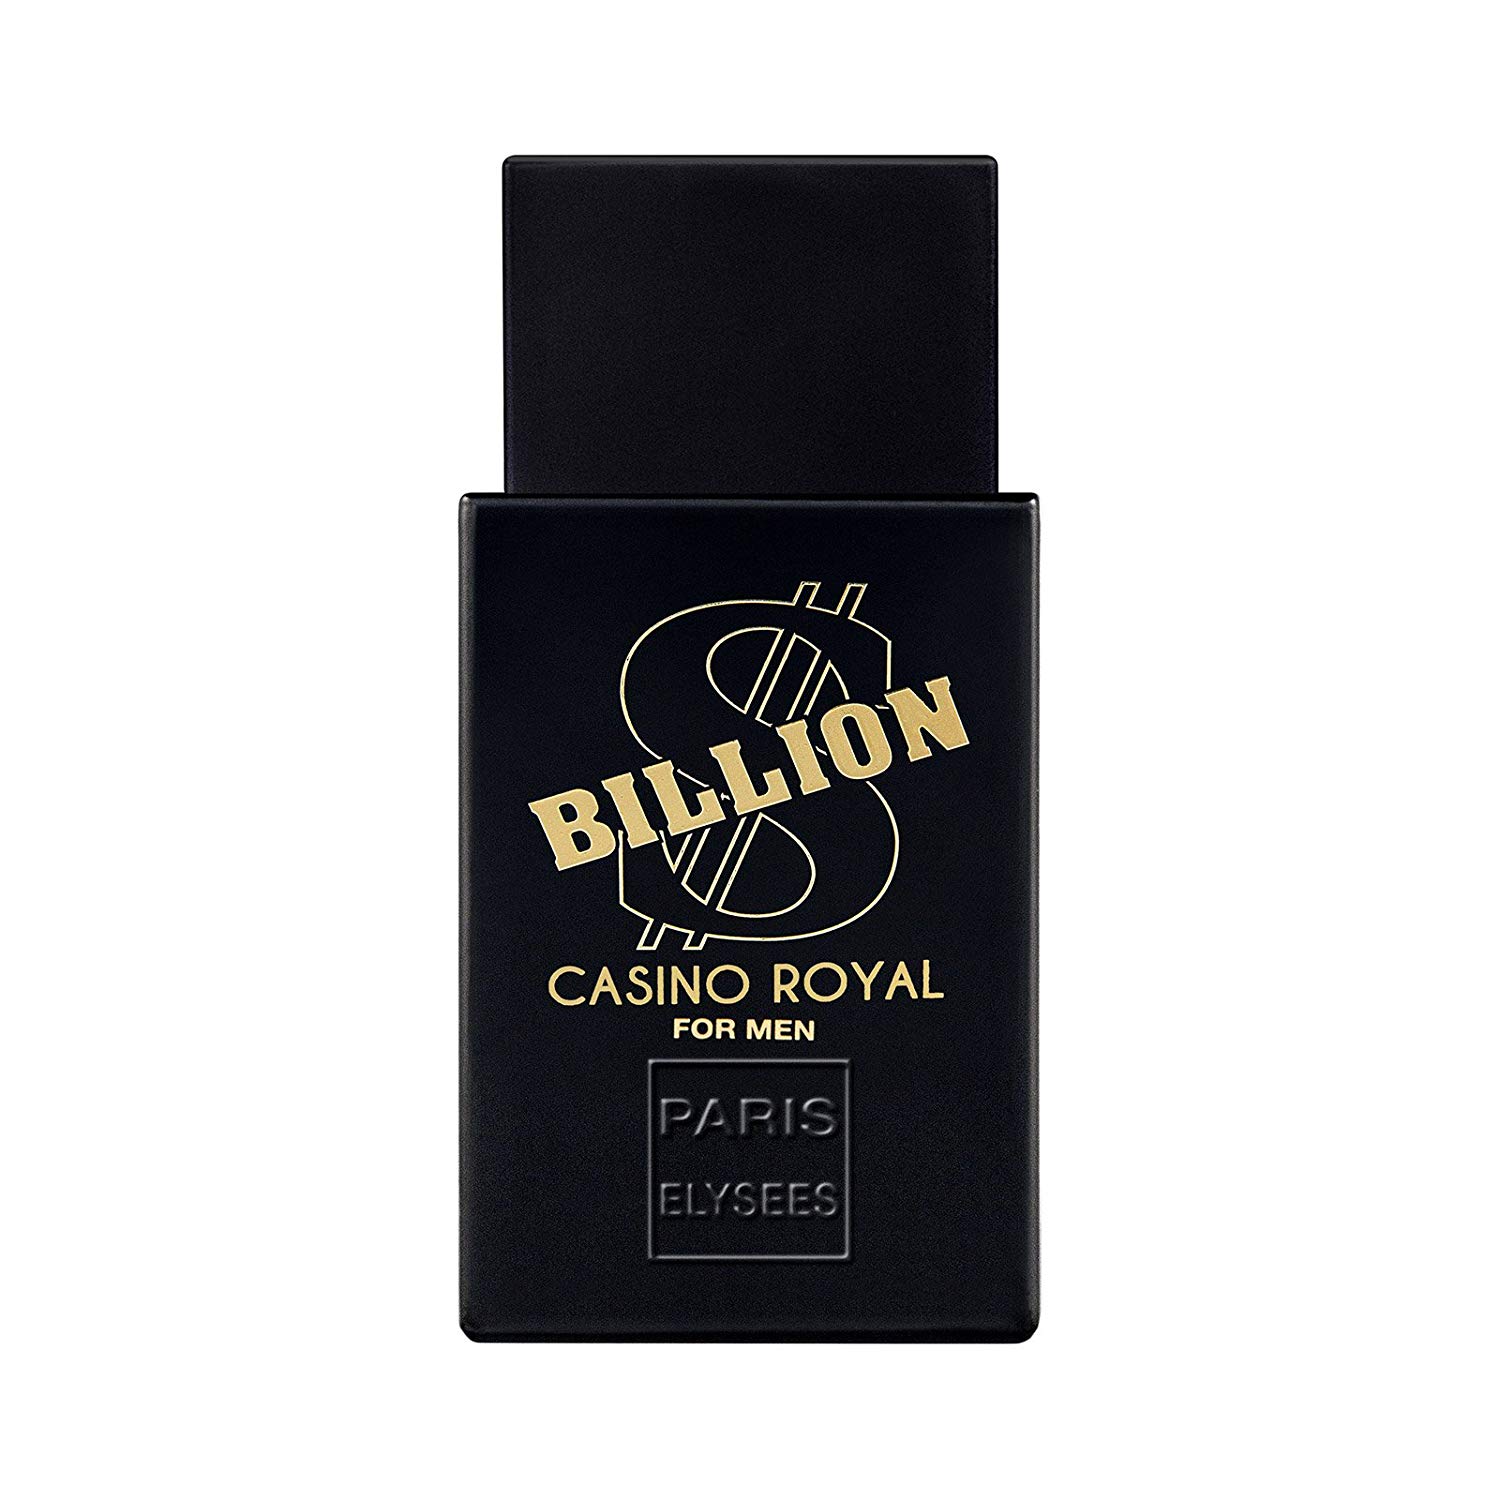 Billion Cassino Royal da Paris Elysees